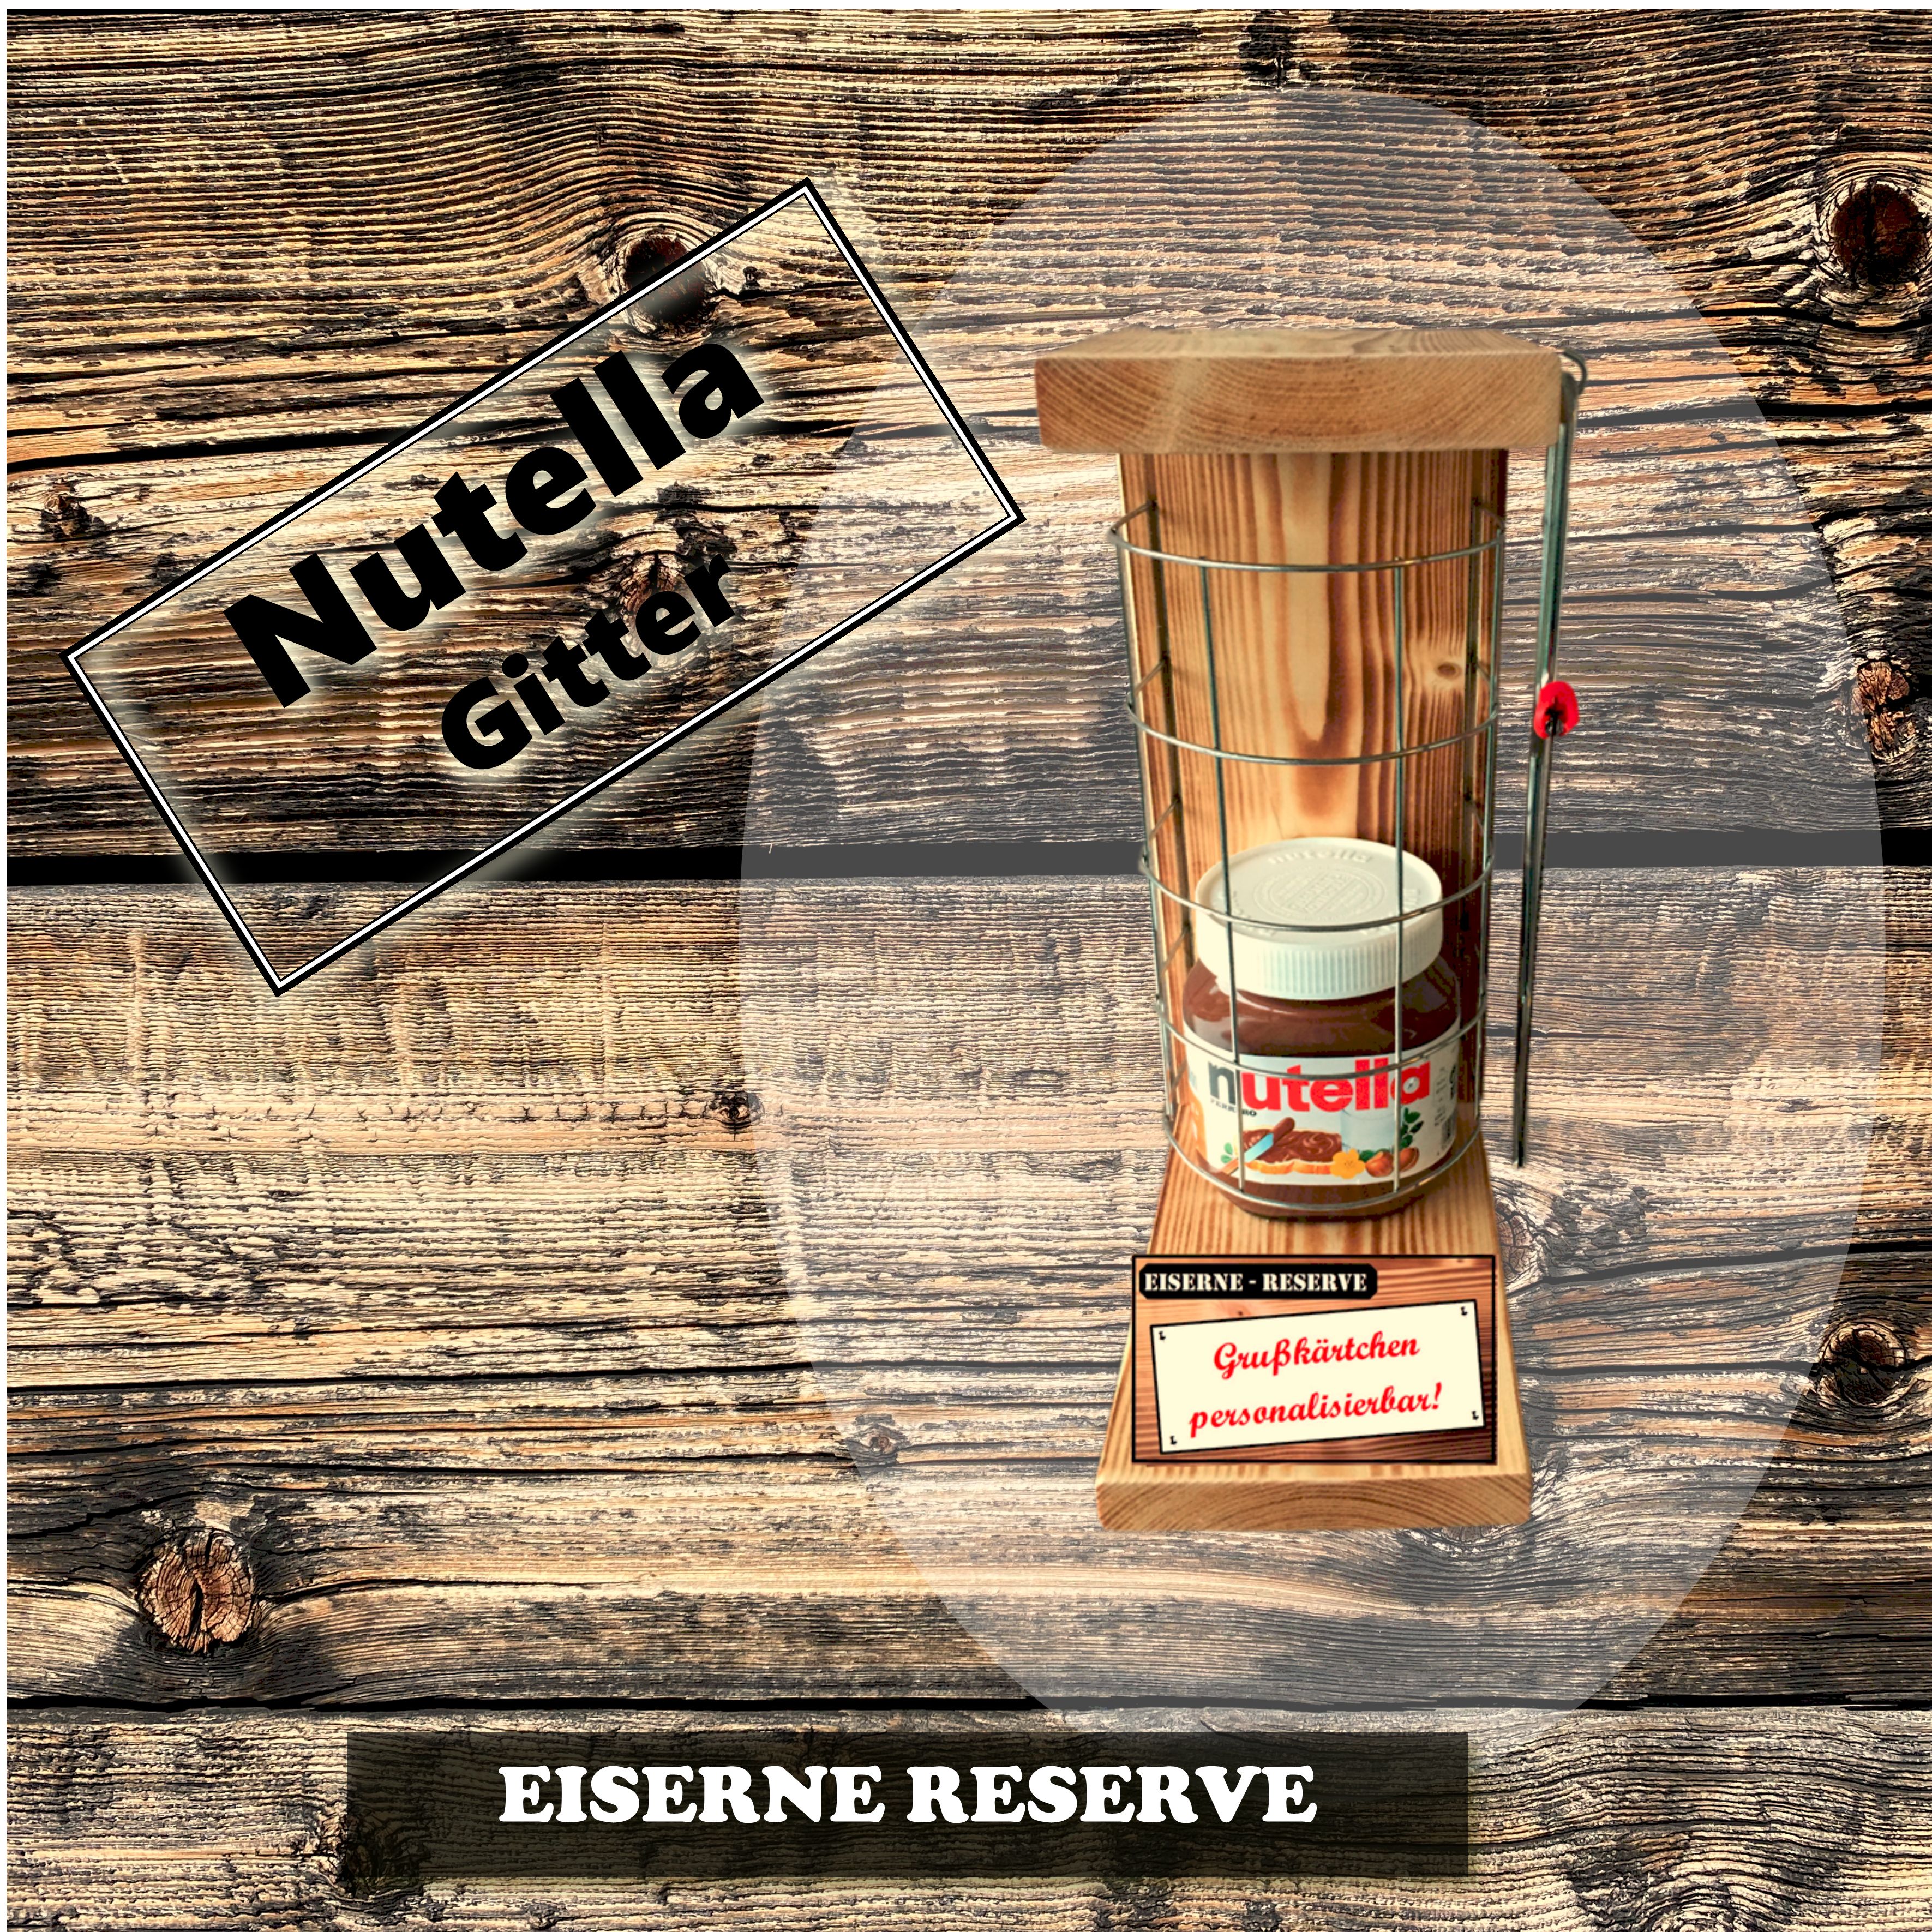 "Personalisierbar" Die Eiserne Reserve mit Nutella 450 g Glas